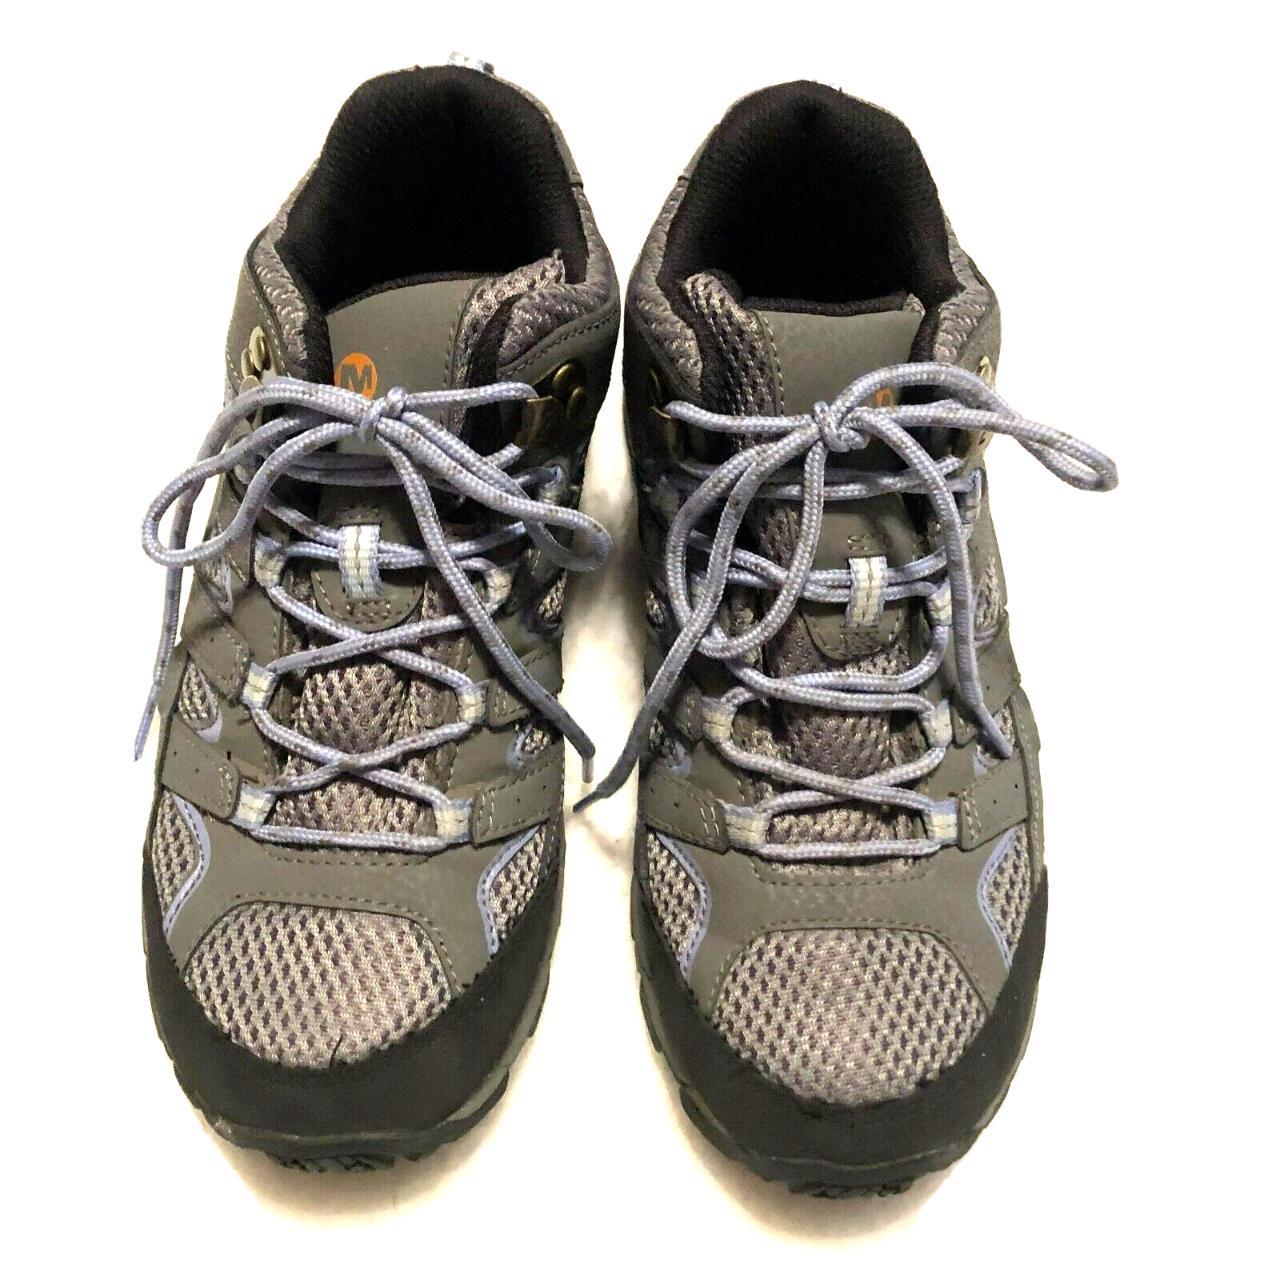 Merrell Moab 2 Waterproof Hiking Shoes - Men's